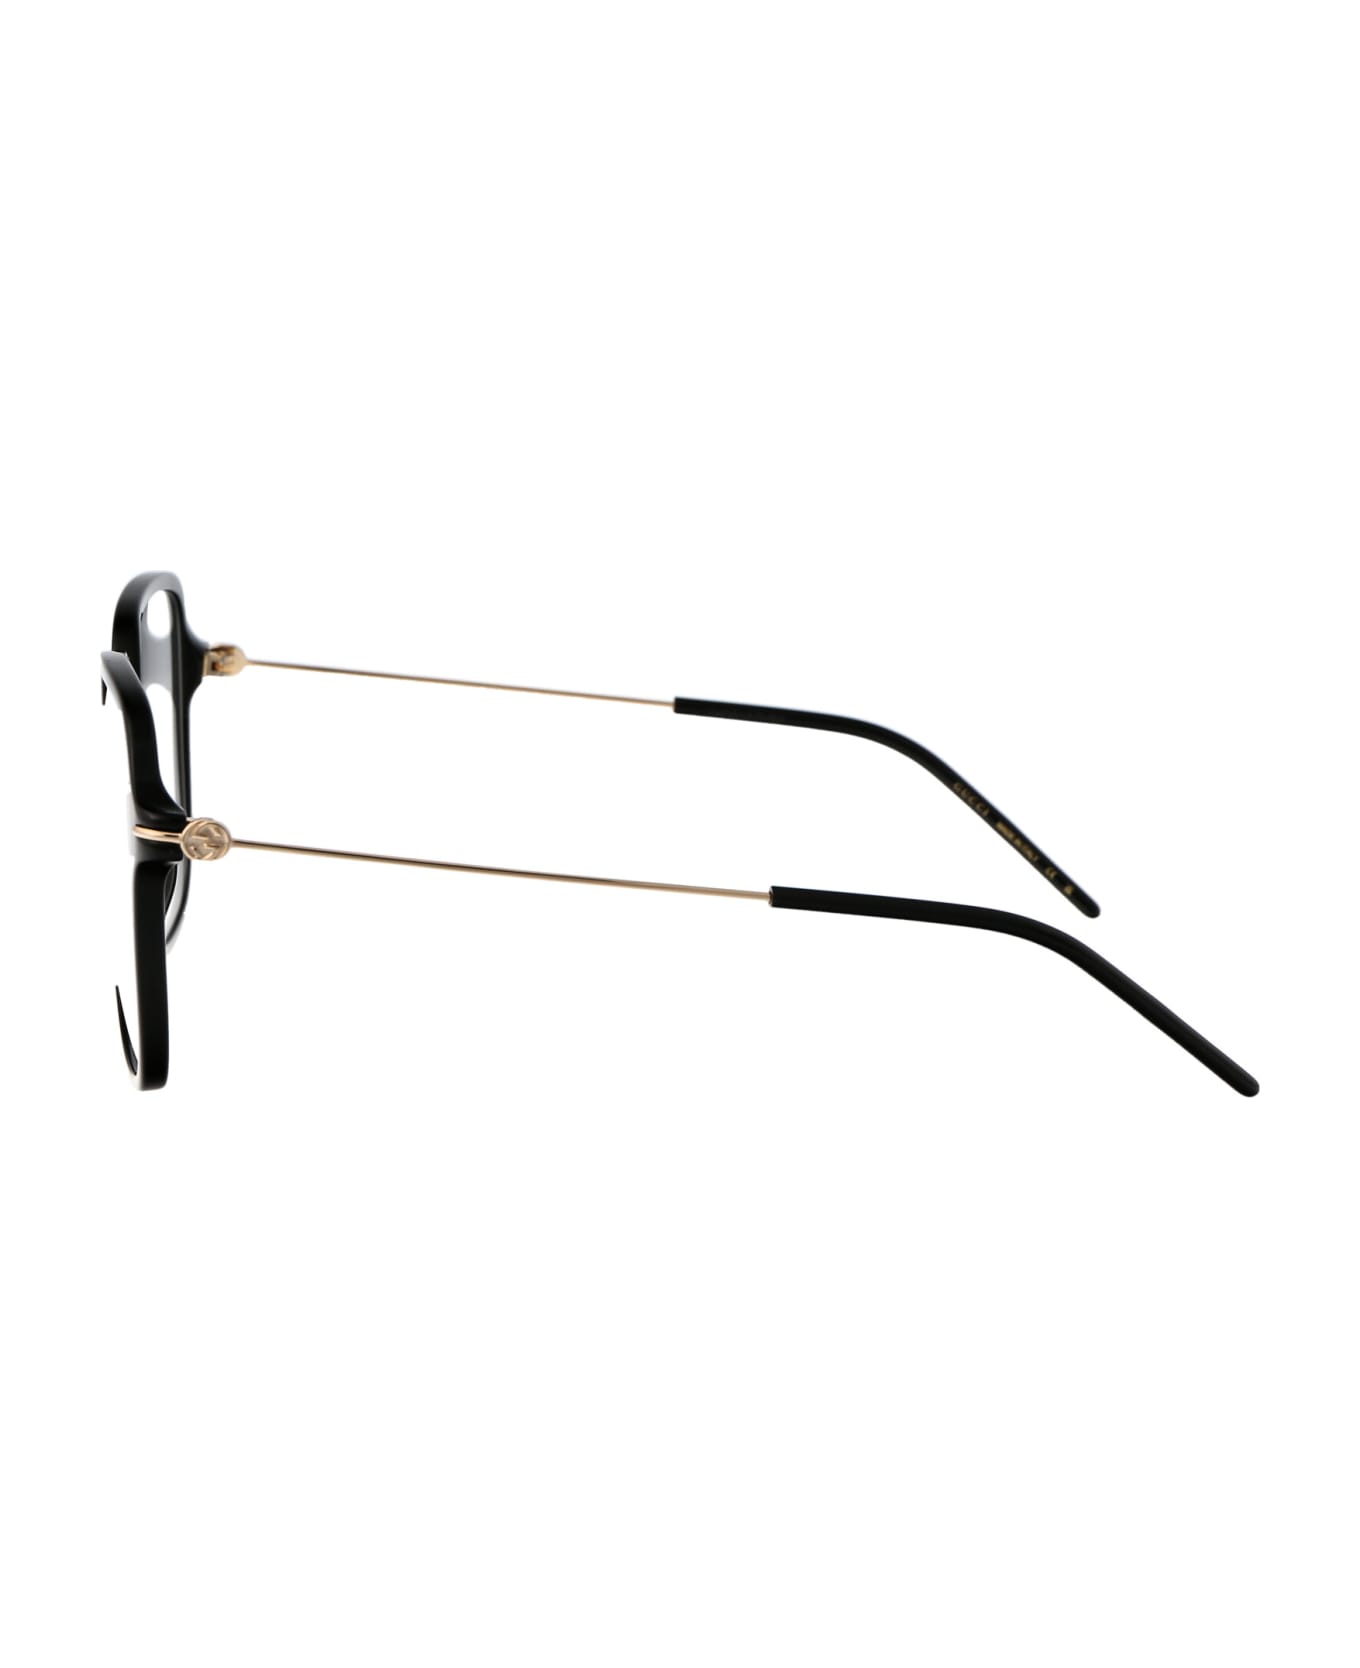 Gucci Eyewear Gg1271o Glasses - 001 BLACK GOLD TRANSPARENT アイウェア